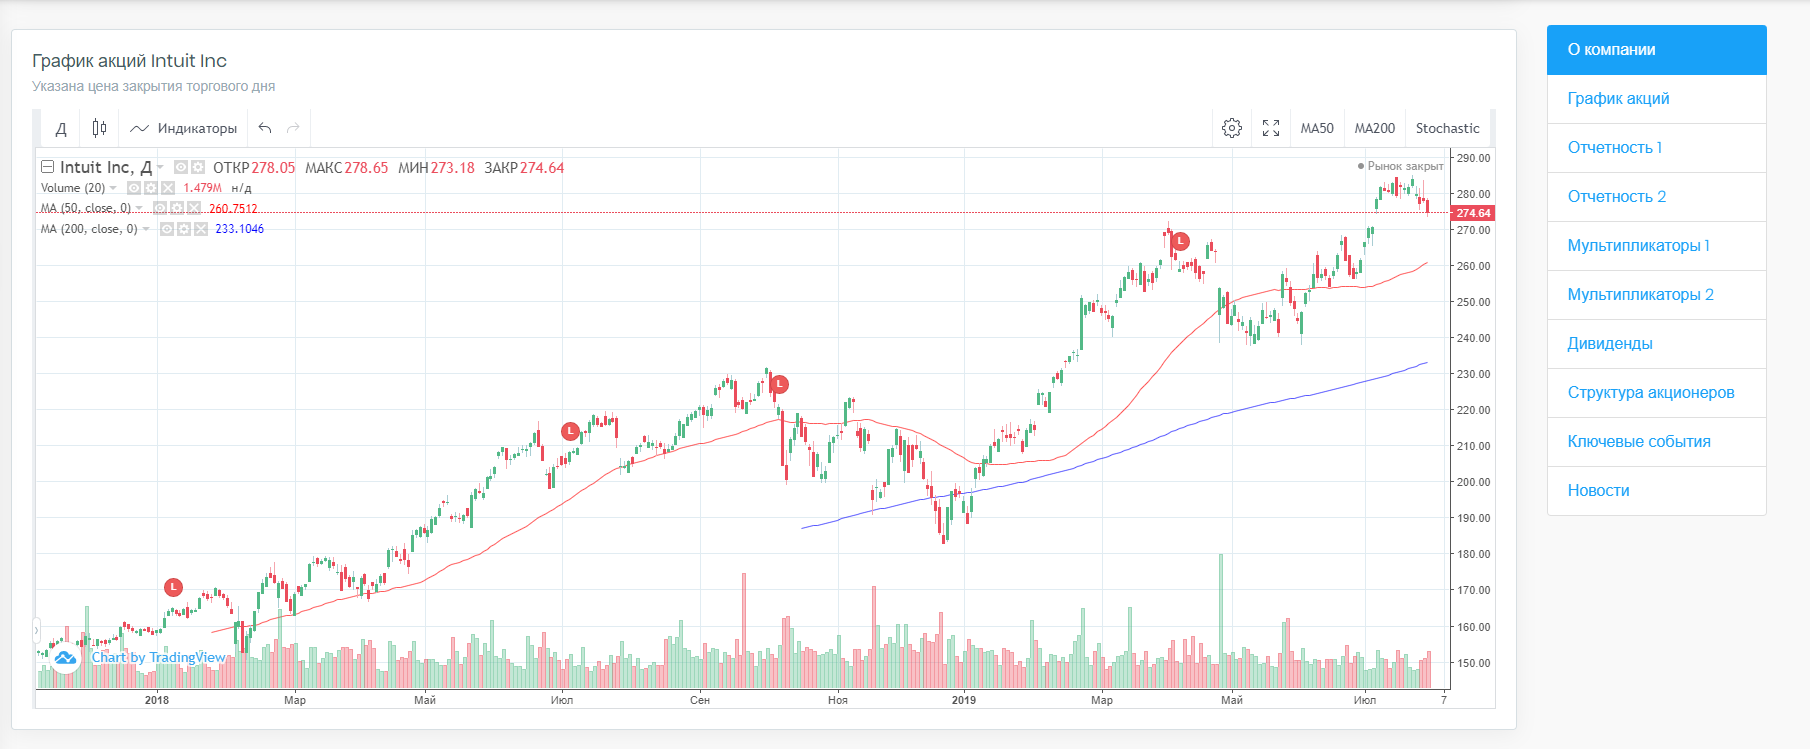 График акций. Диаграмма акций. Растущий график акций. Акции растут.